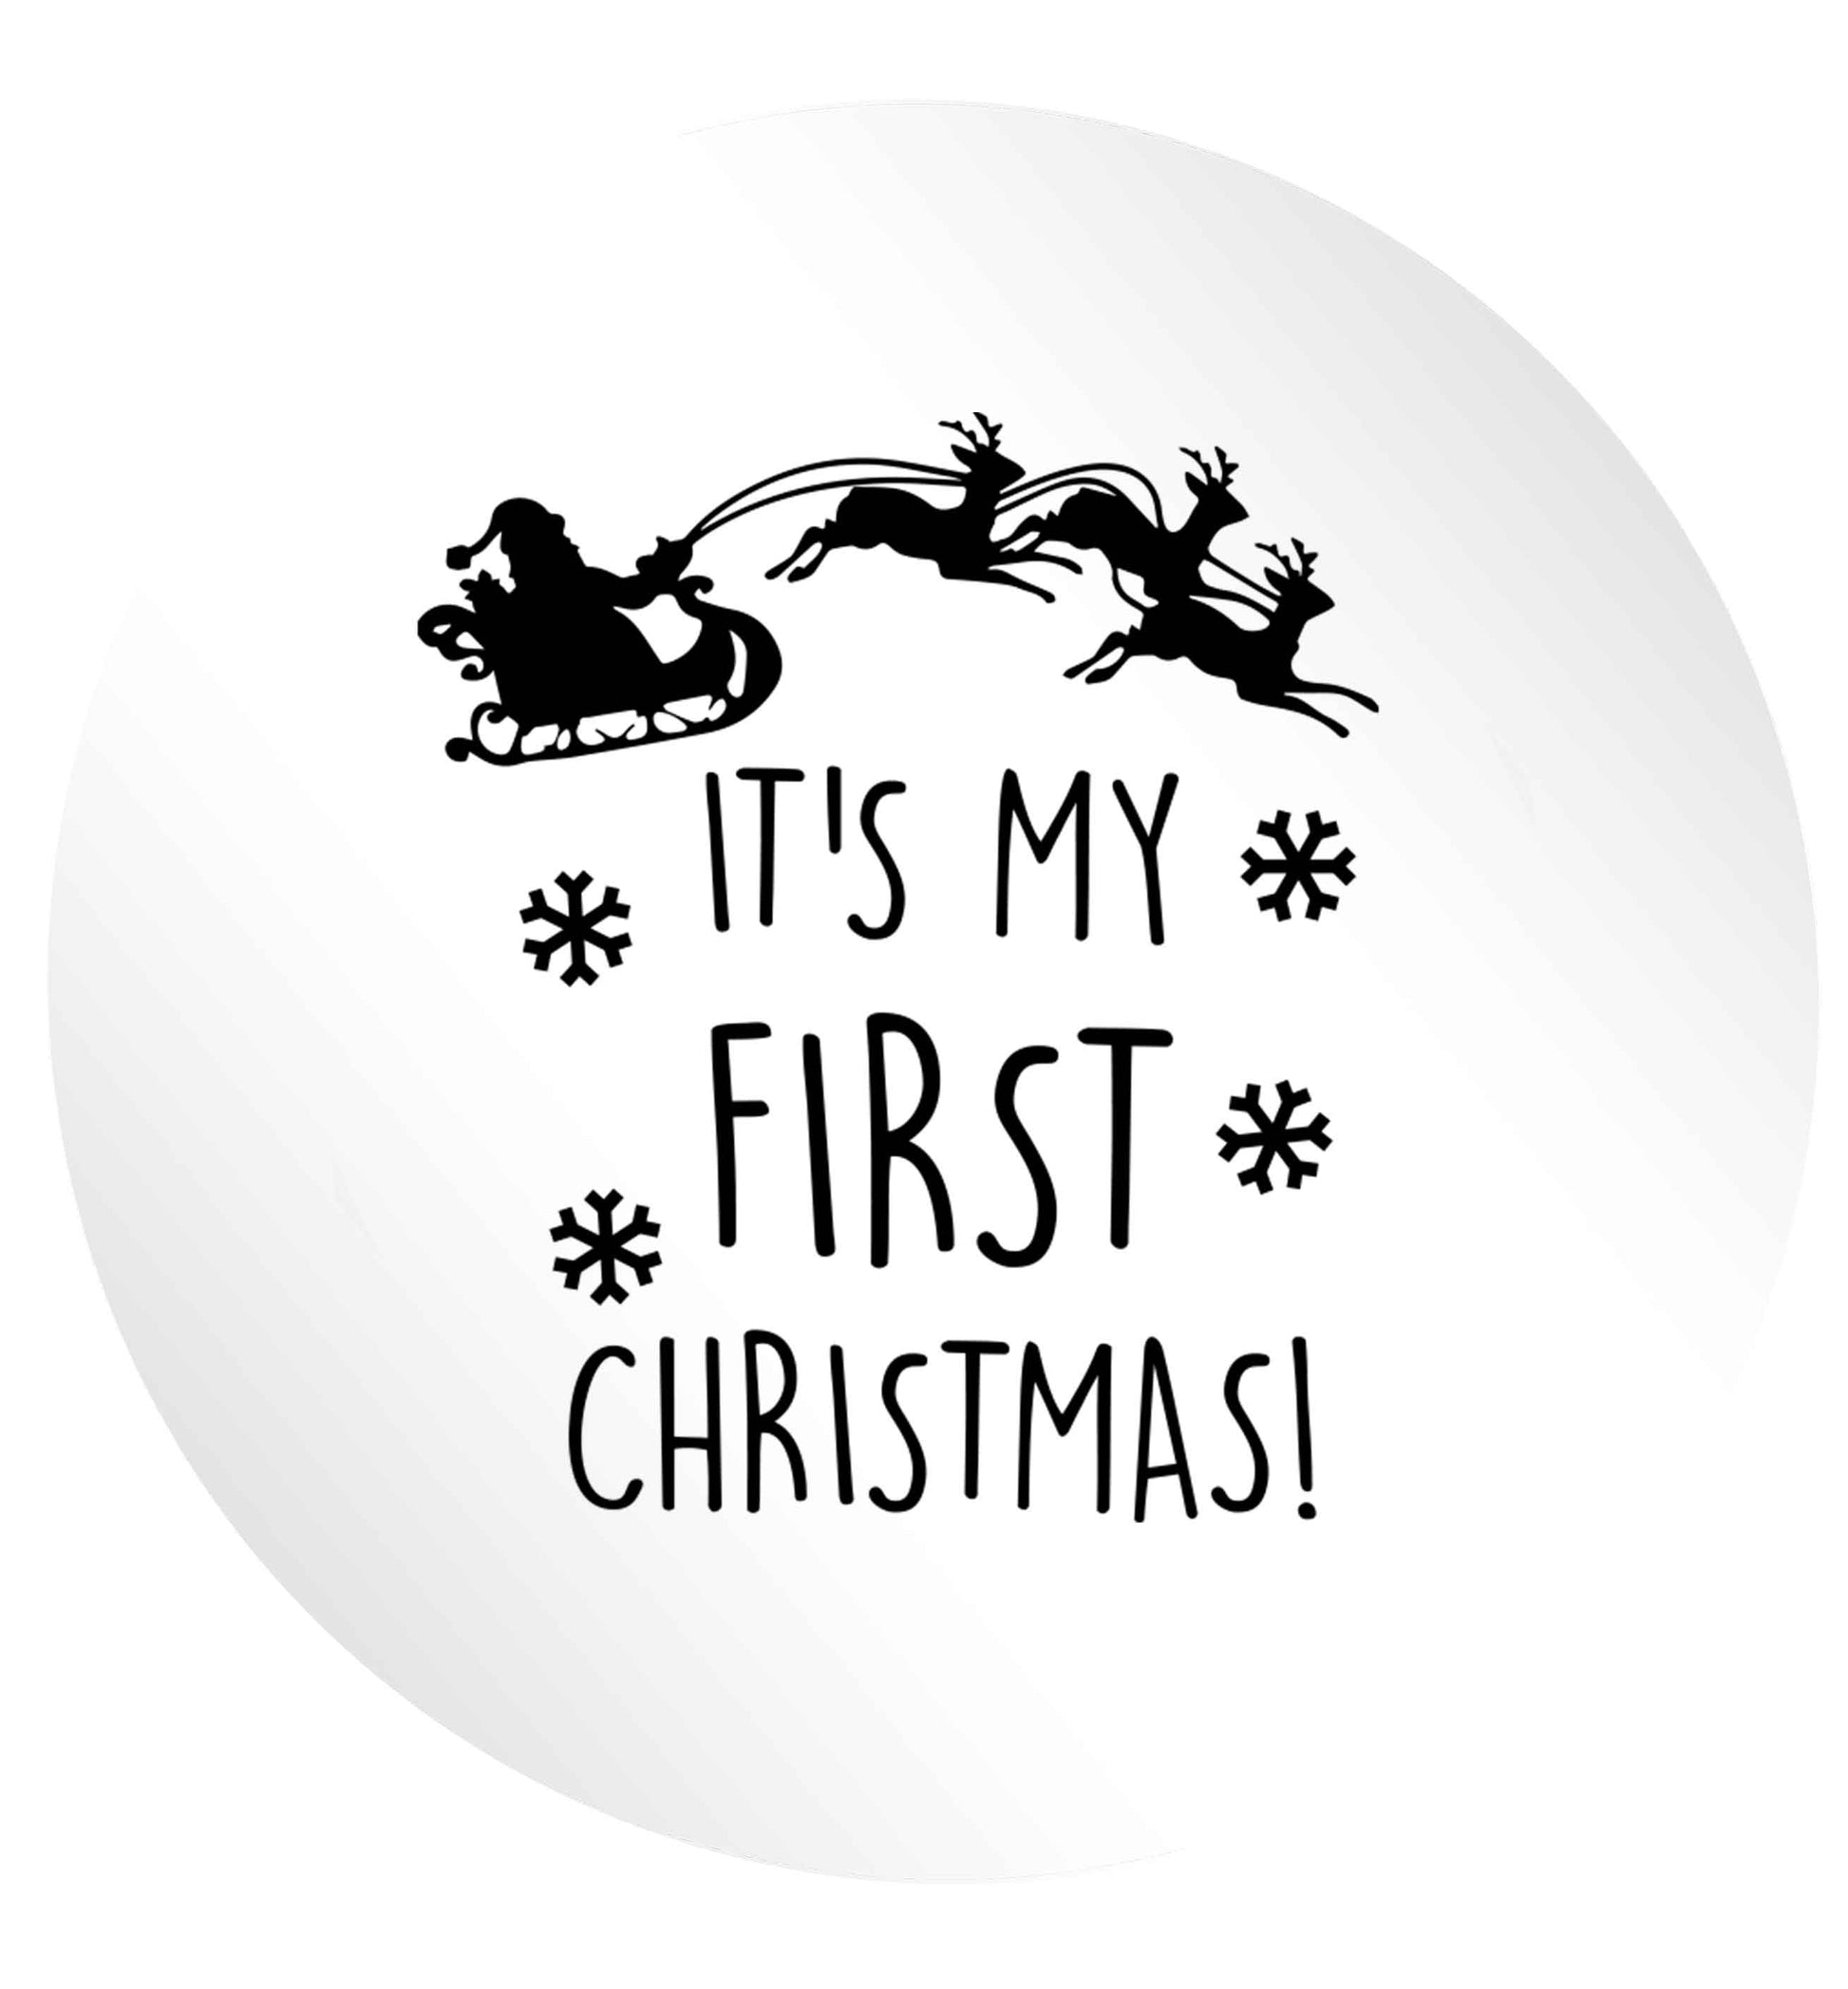 It's my first Christmas - Santa sleigh text 24 @ 45mm matt circle stickers